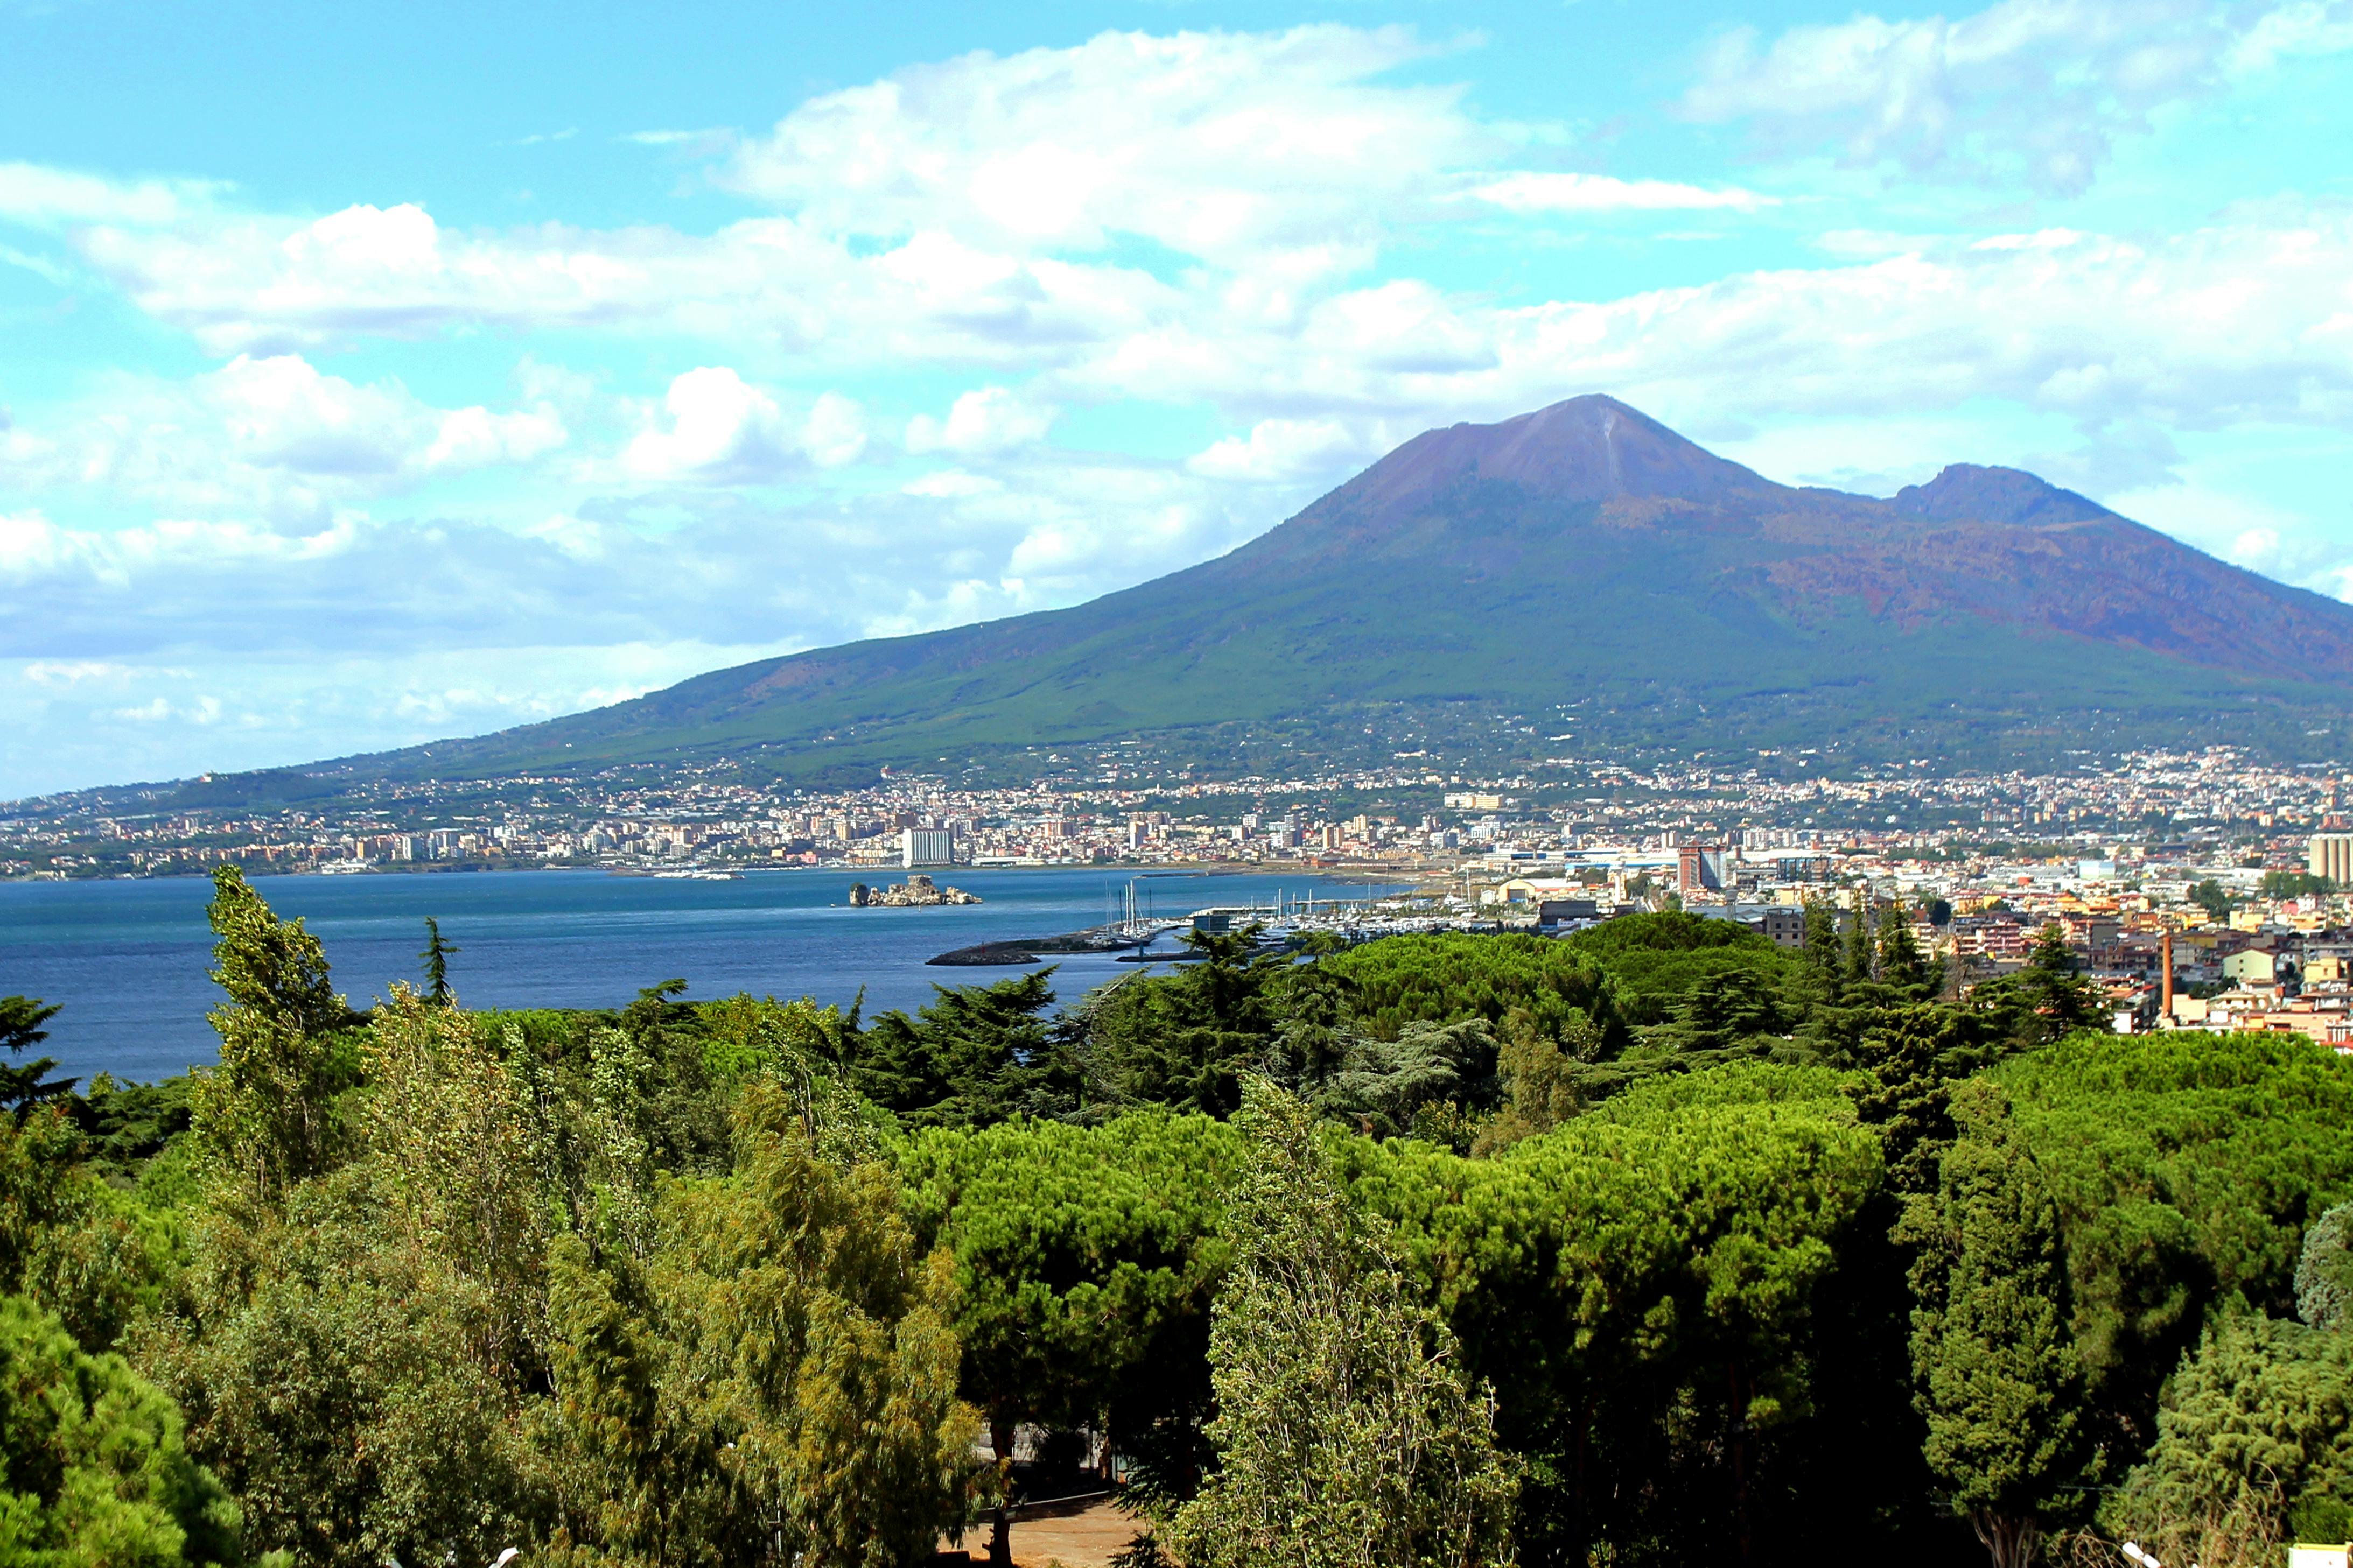 Tour of Pompeii and Mount Vesuvius from Naples